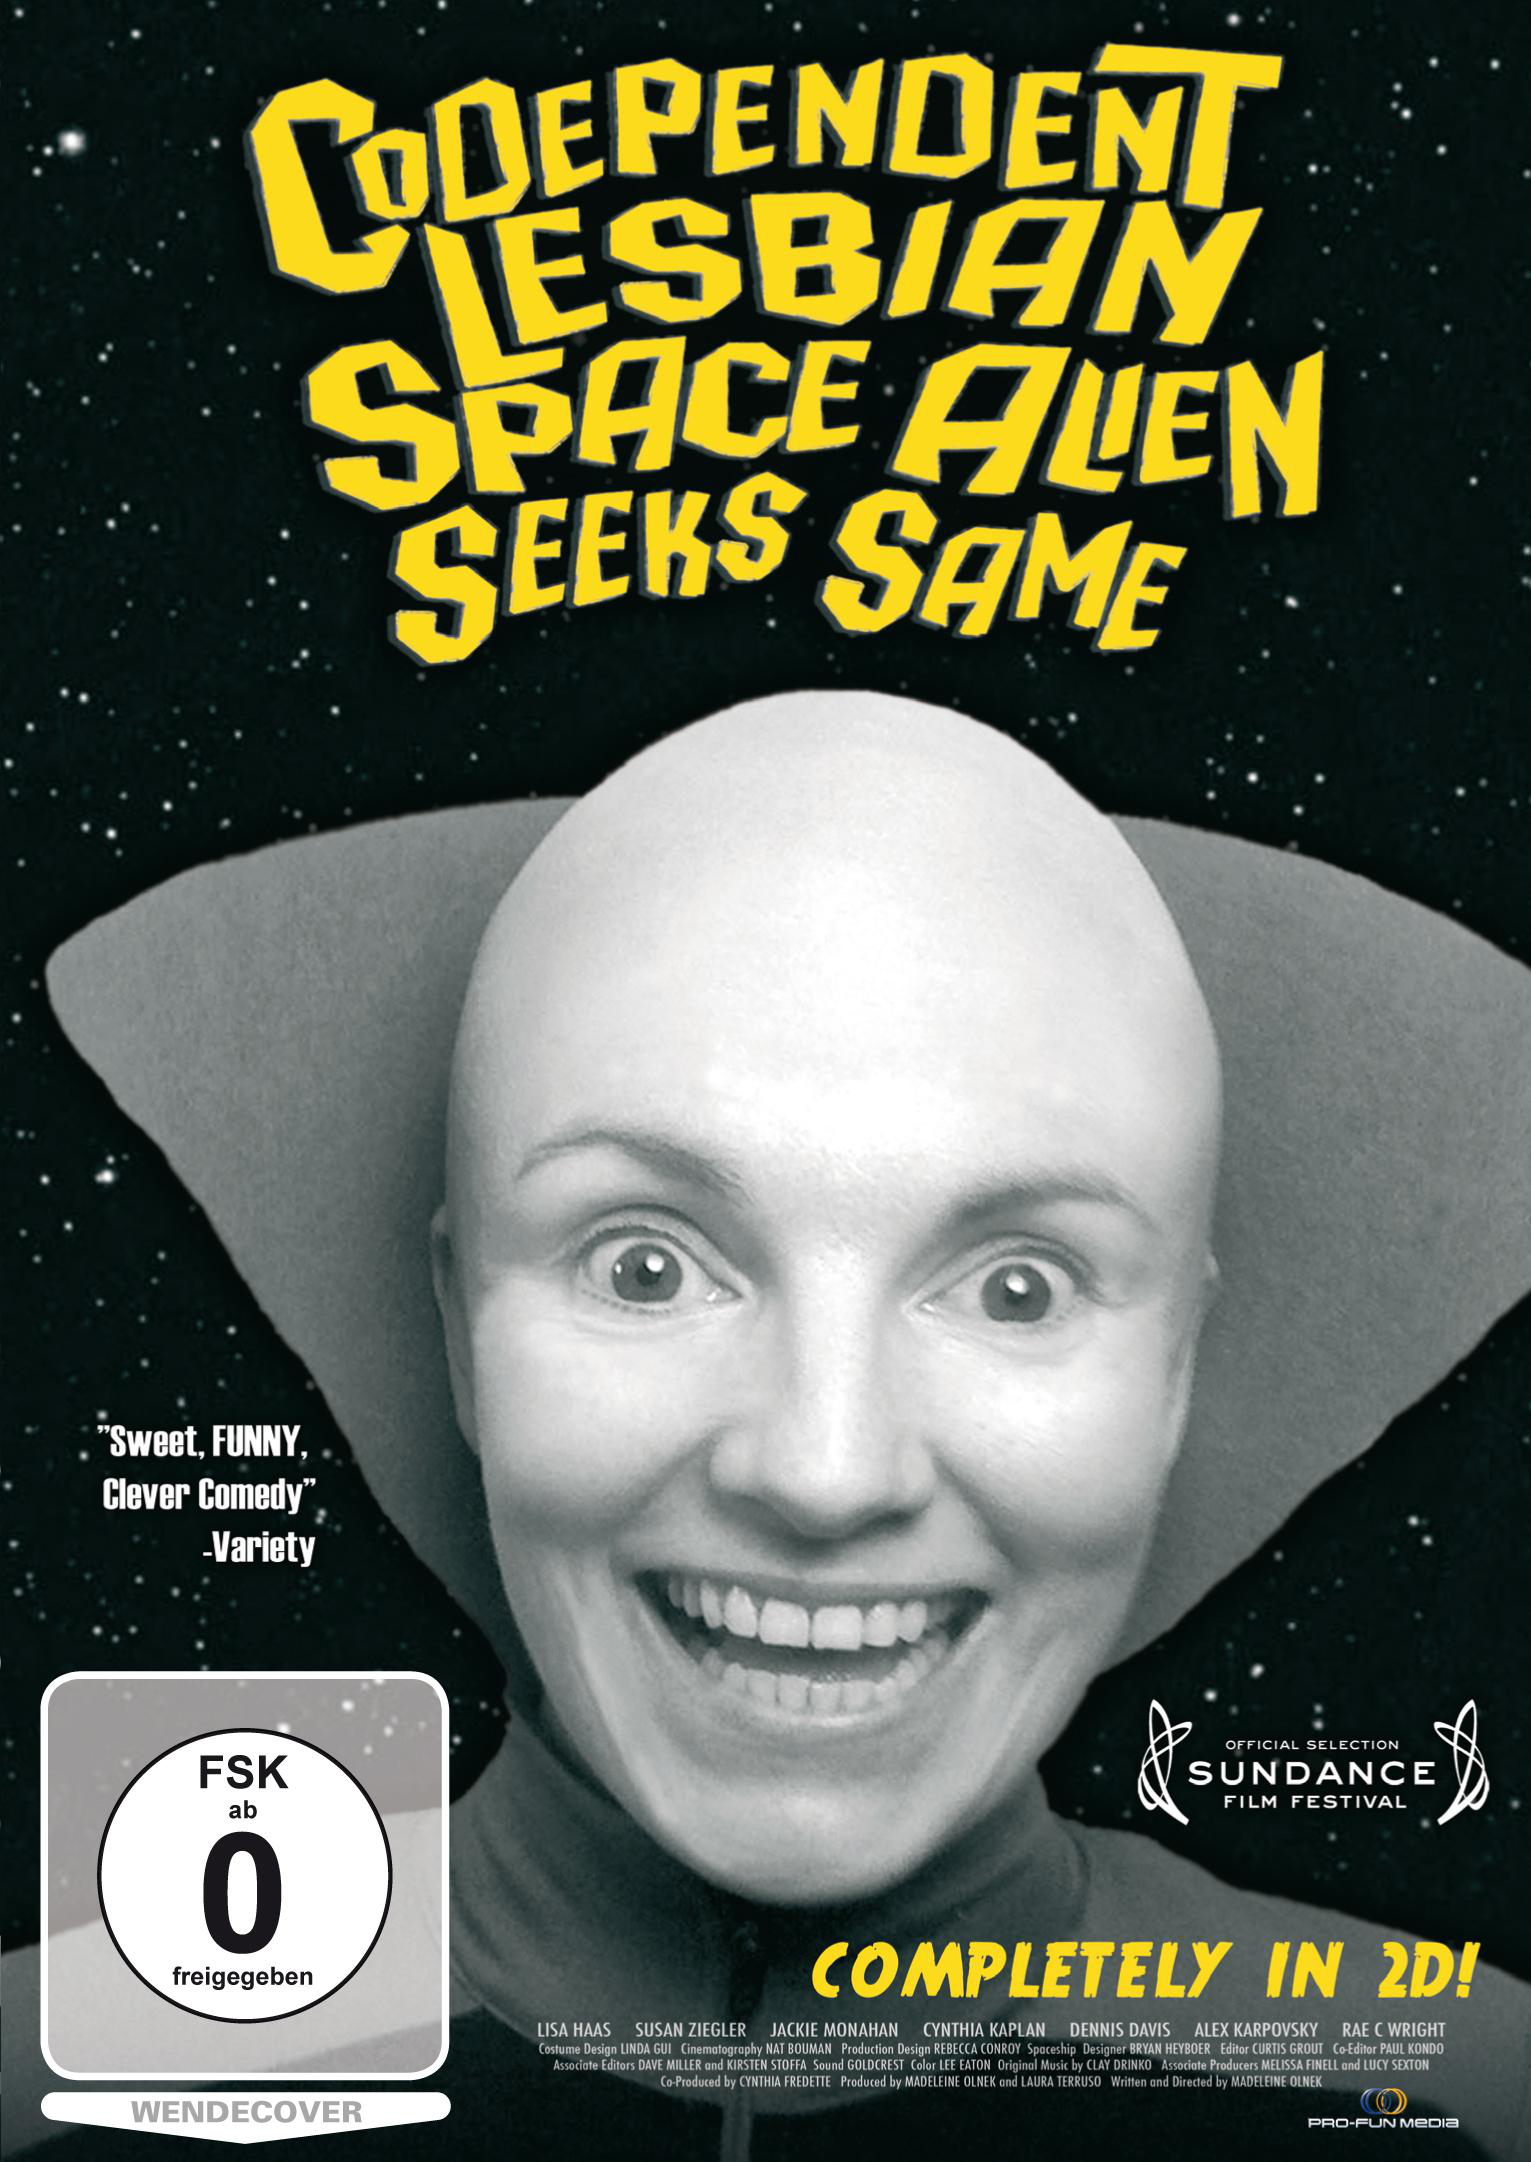 Codependent Lesbian Space DVD Same Alien Seeks